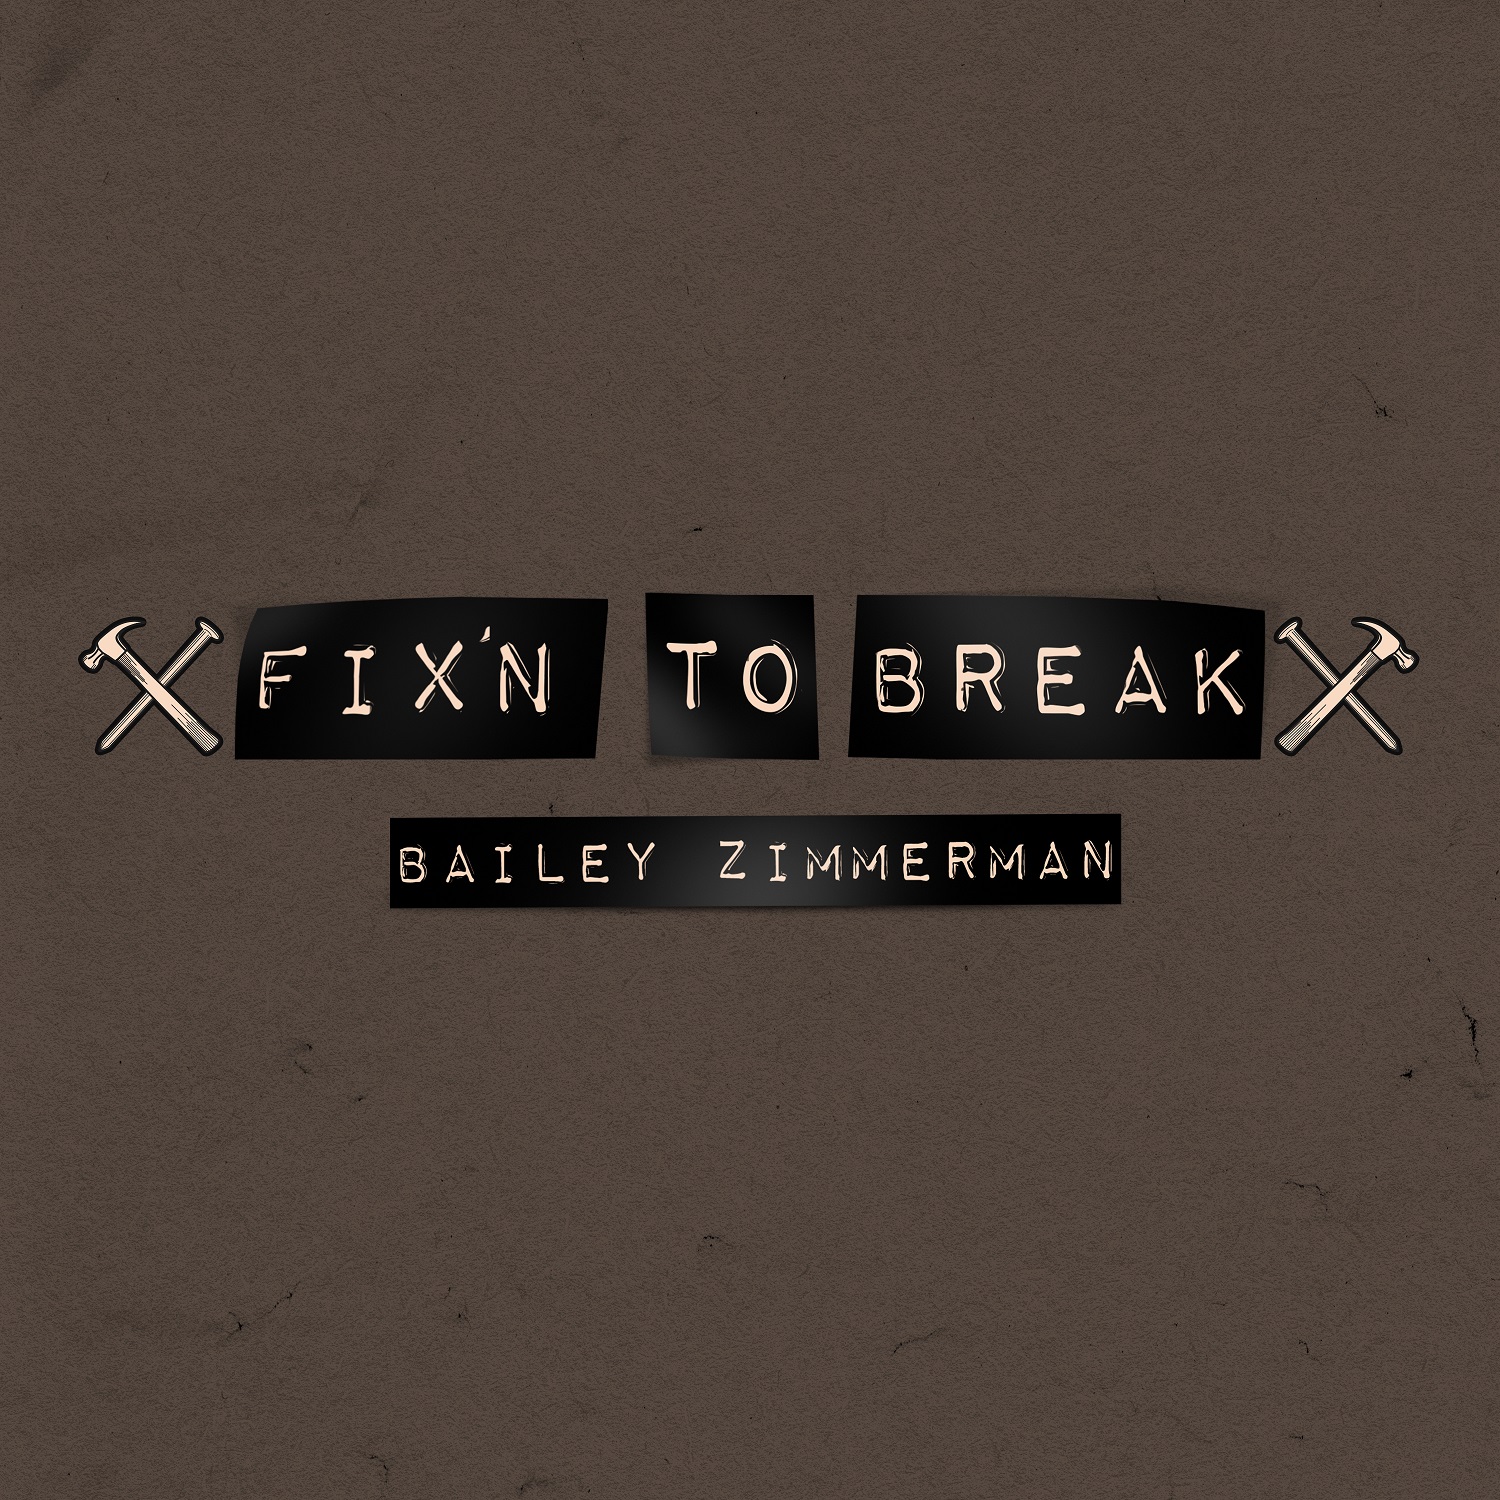 BAILEY ZIMMERMAN RELEASES BRAND-NEW TRACK “FIX’N TO BREAK”